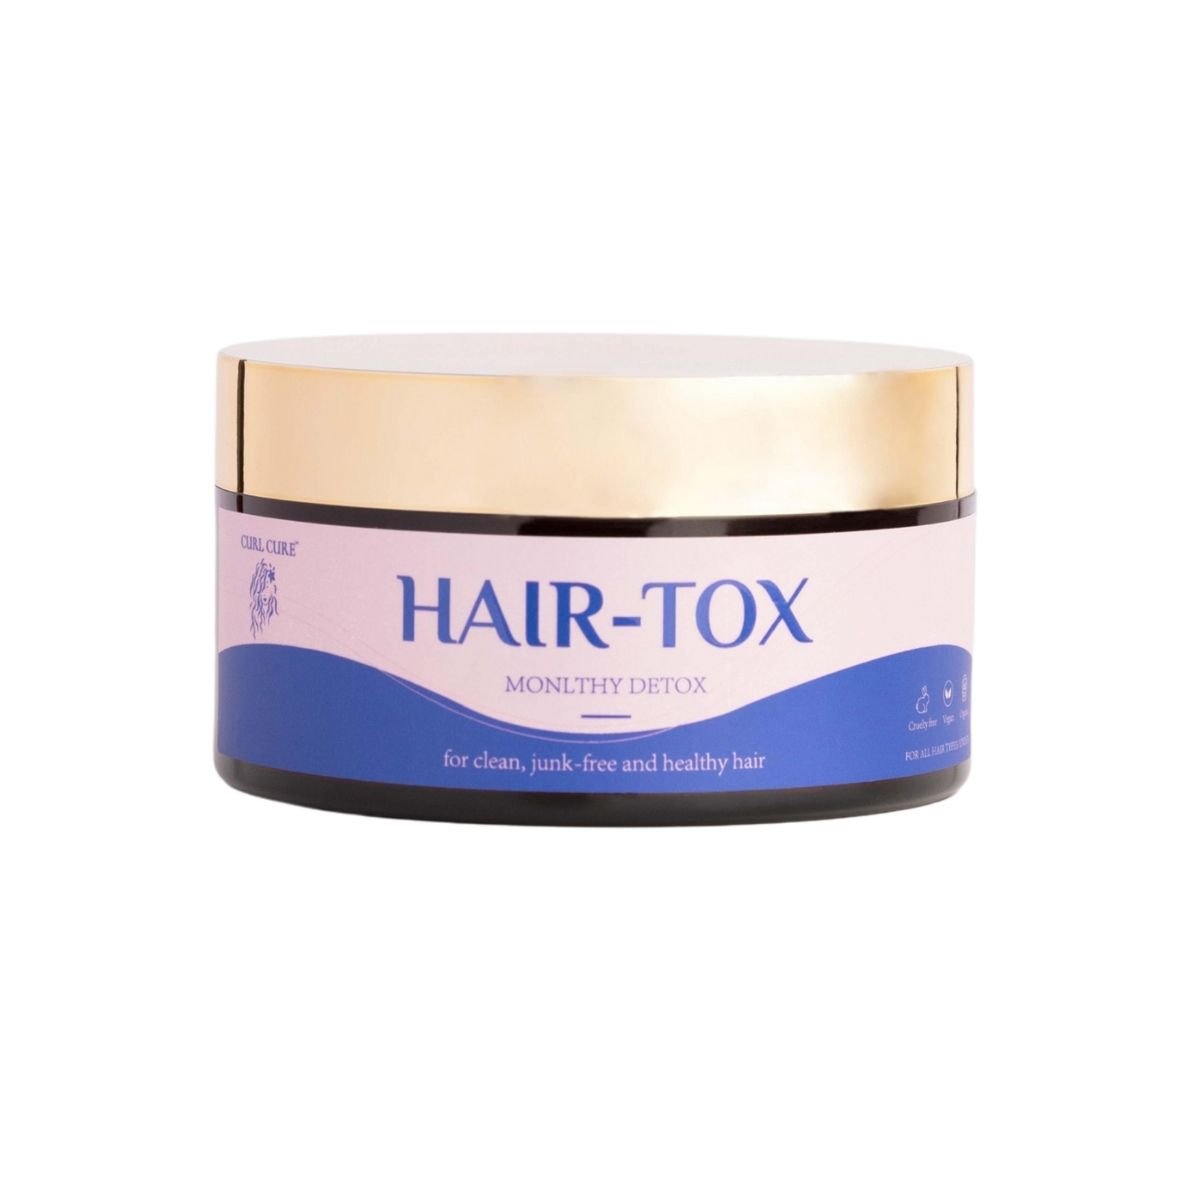 Restart Kit (Hair-tox & Travel Kit) - Curl Cure